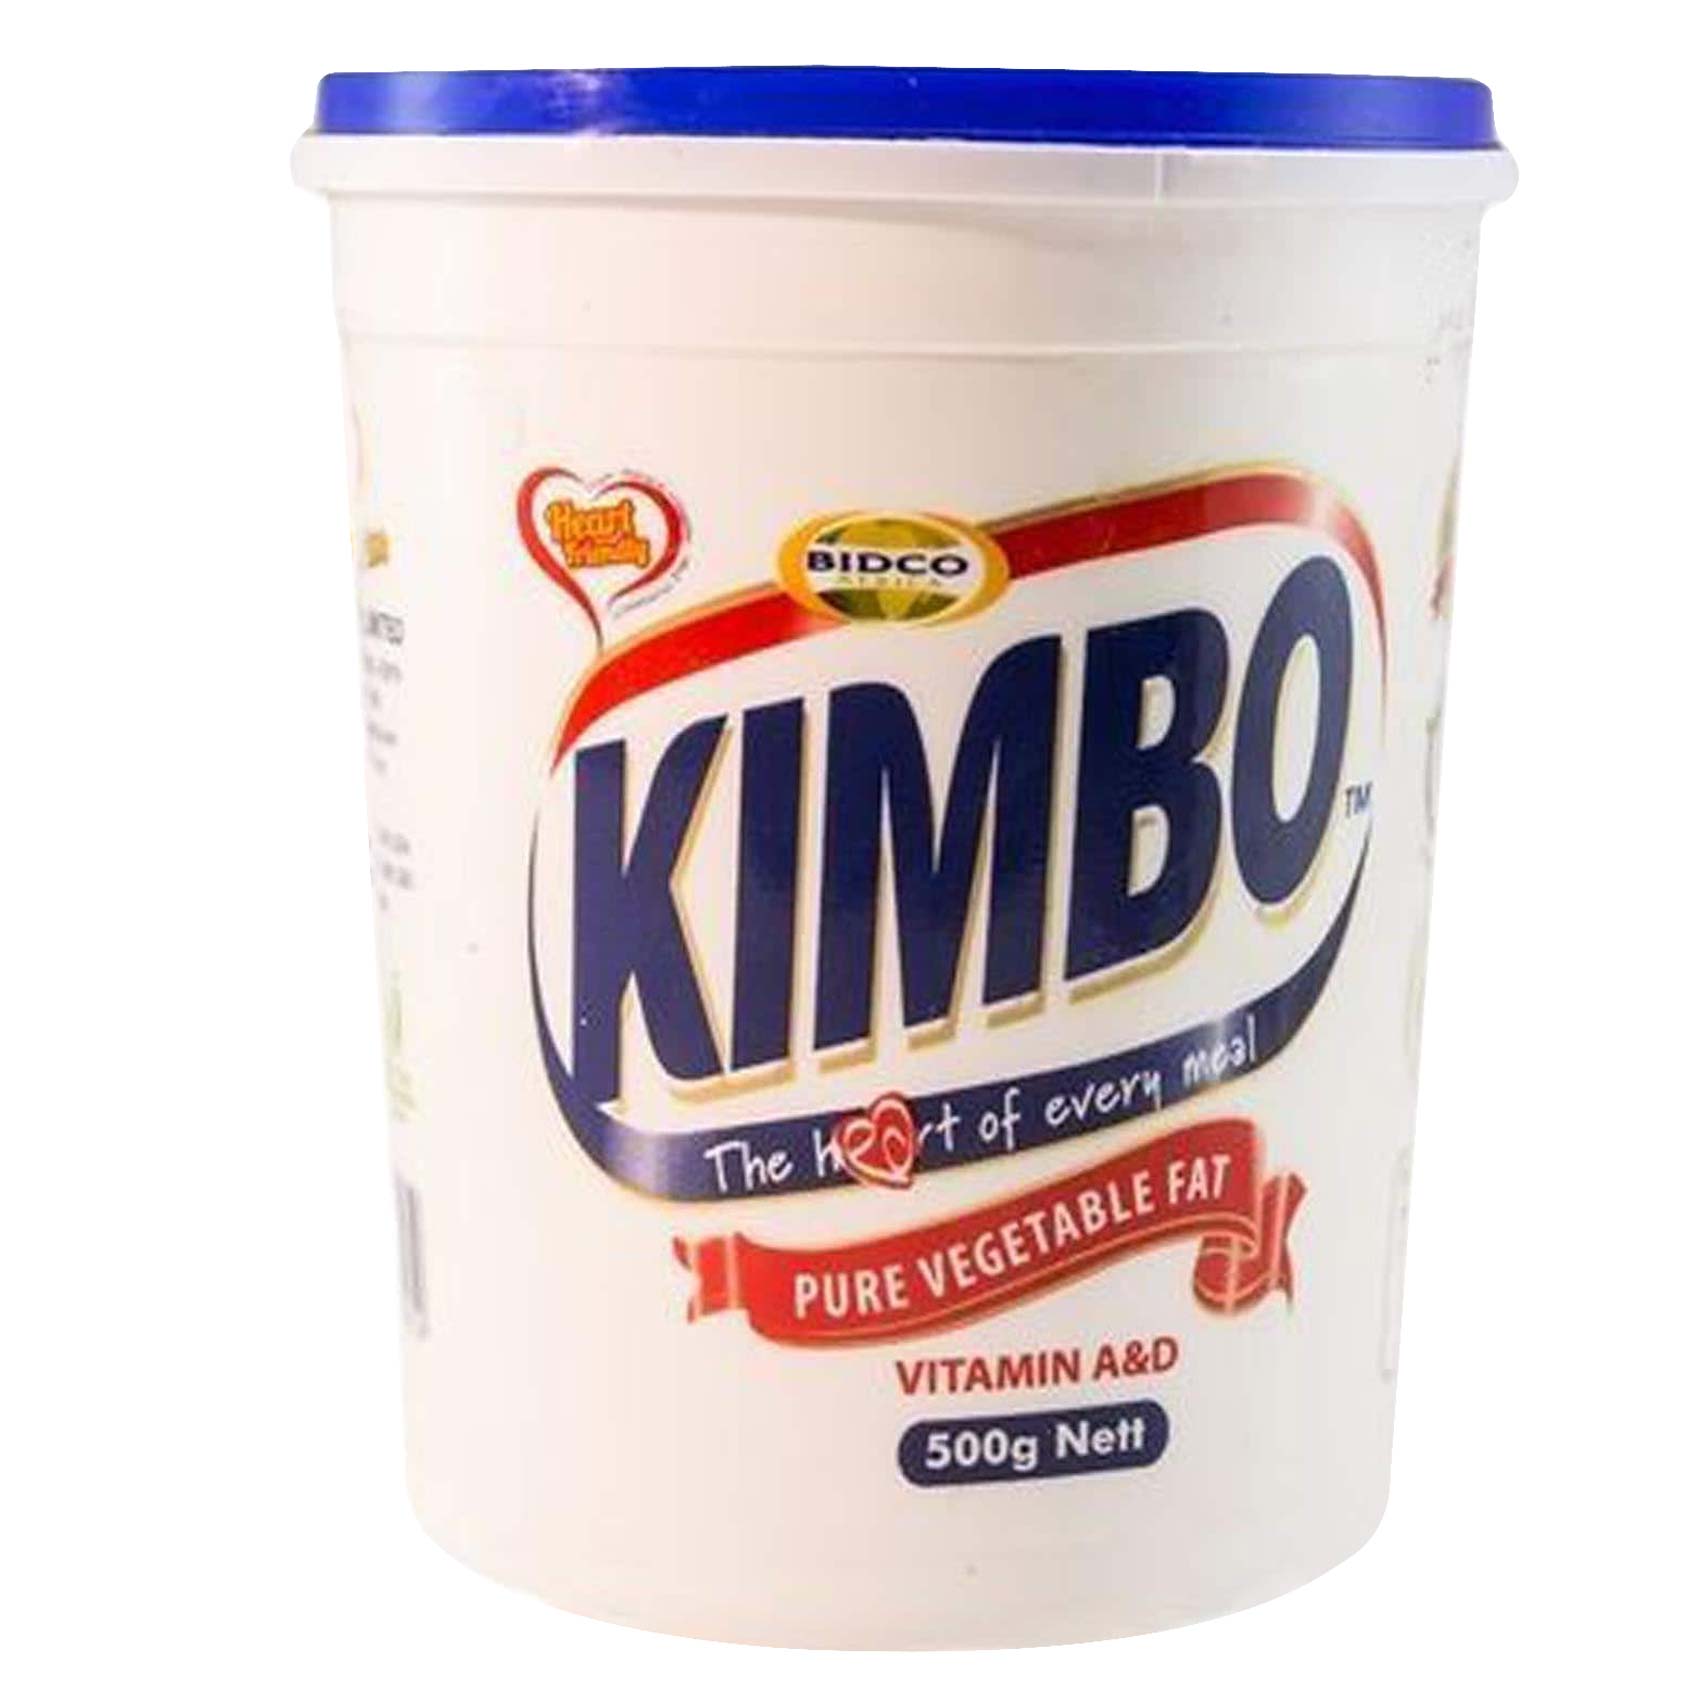 Bidco Kimbo Cooking Vegetable Fat 500g